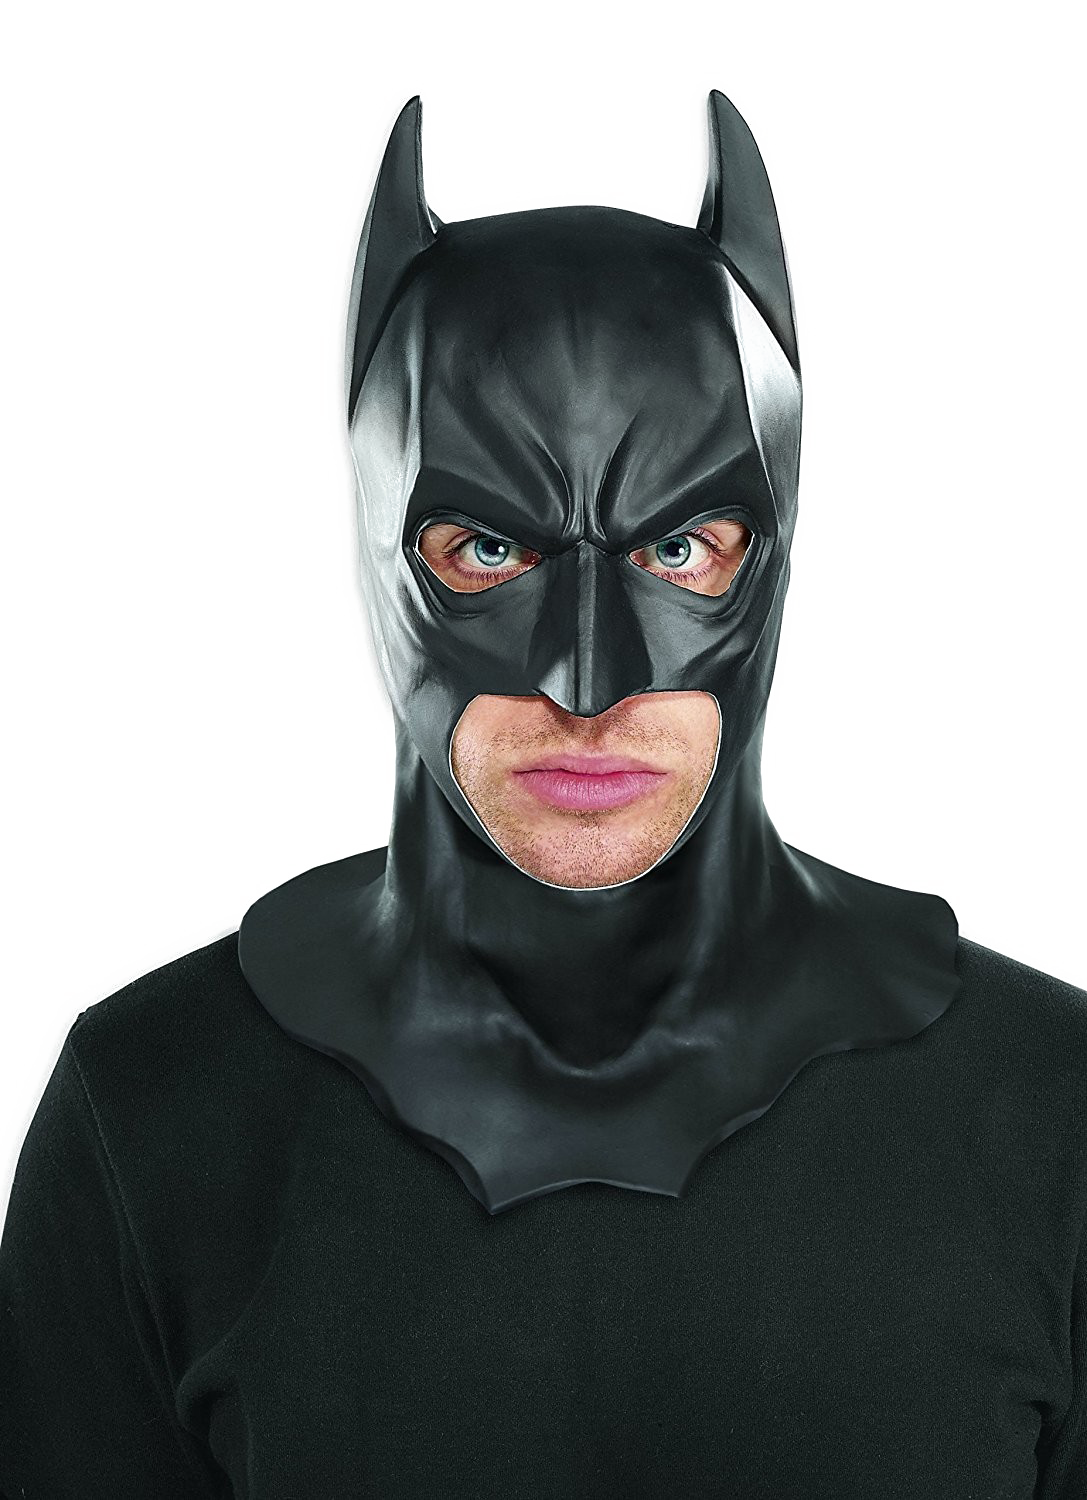 Batman topeng PNG Gambar berkualitas tinggi